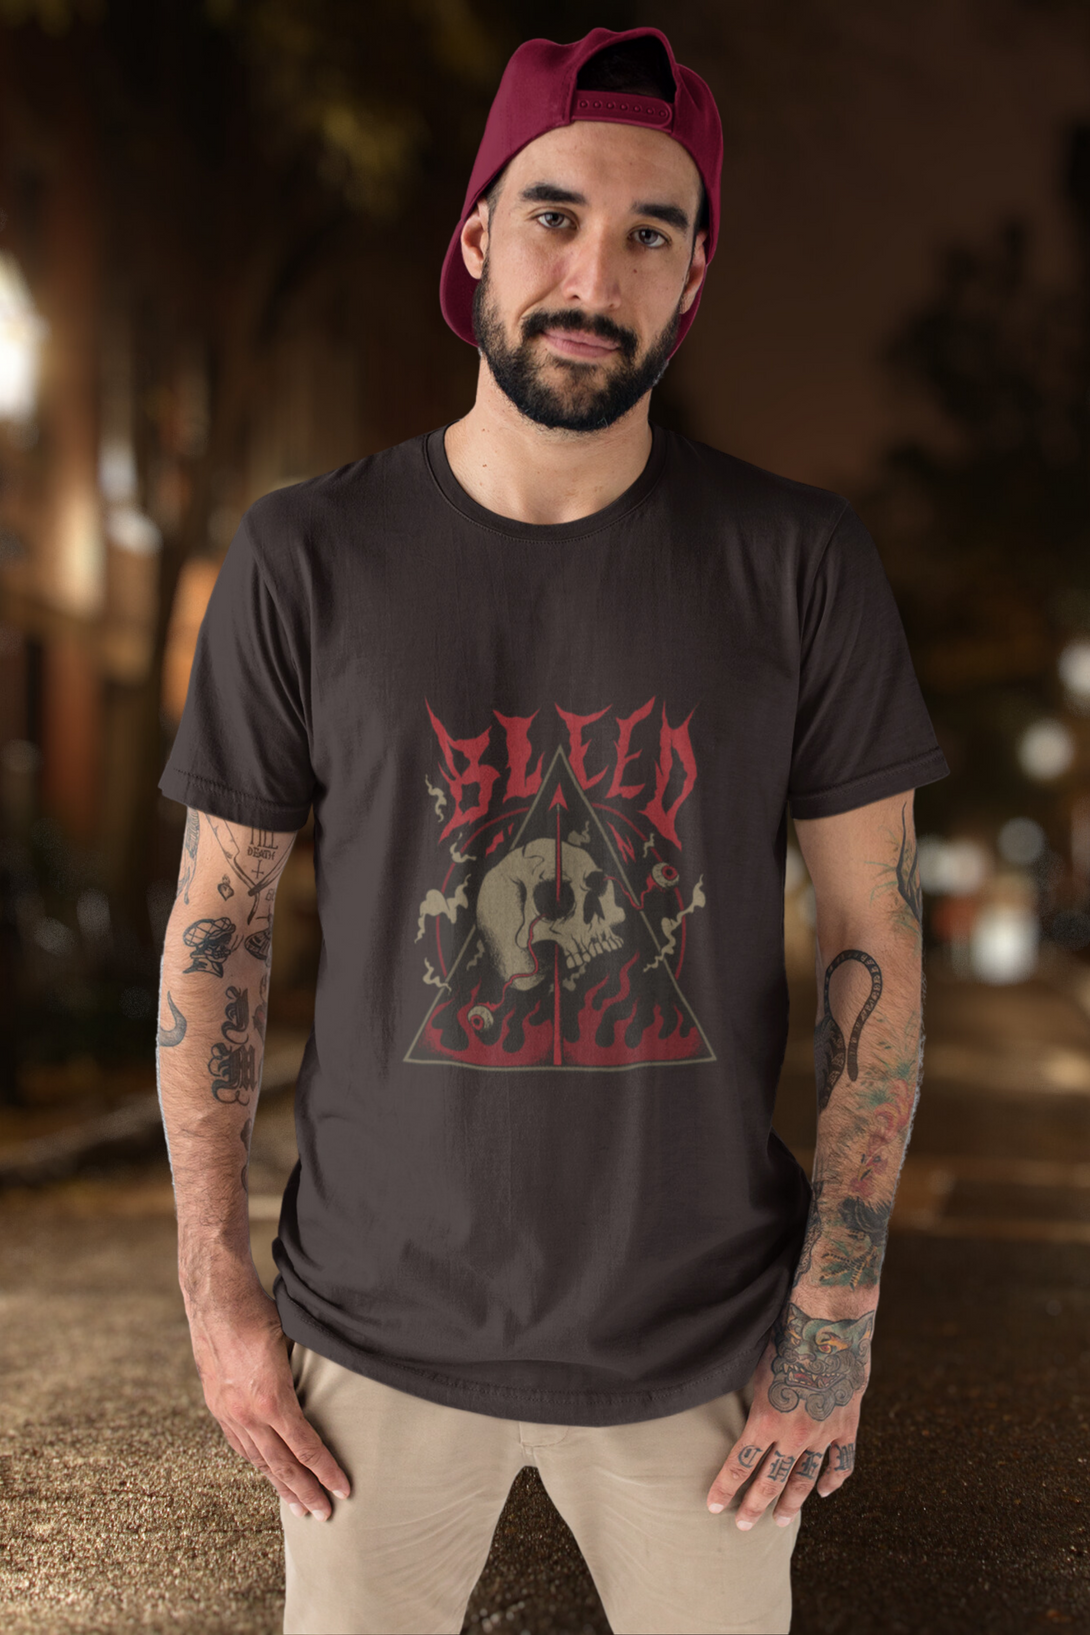 Bleed Printed T-Shirt For Men - WowWaves - 2